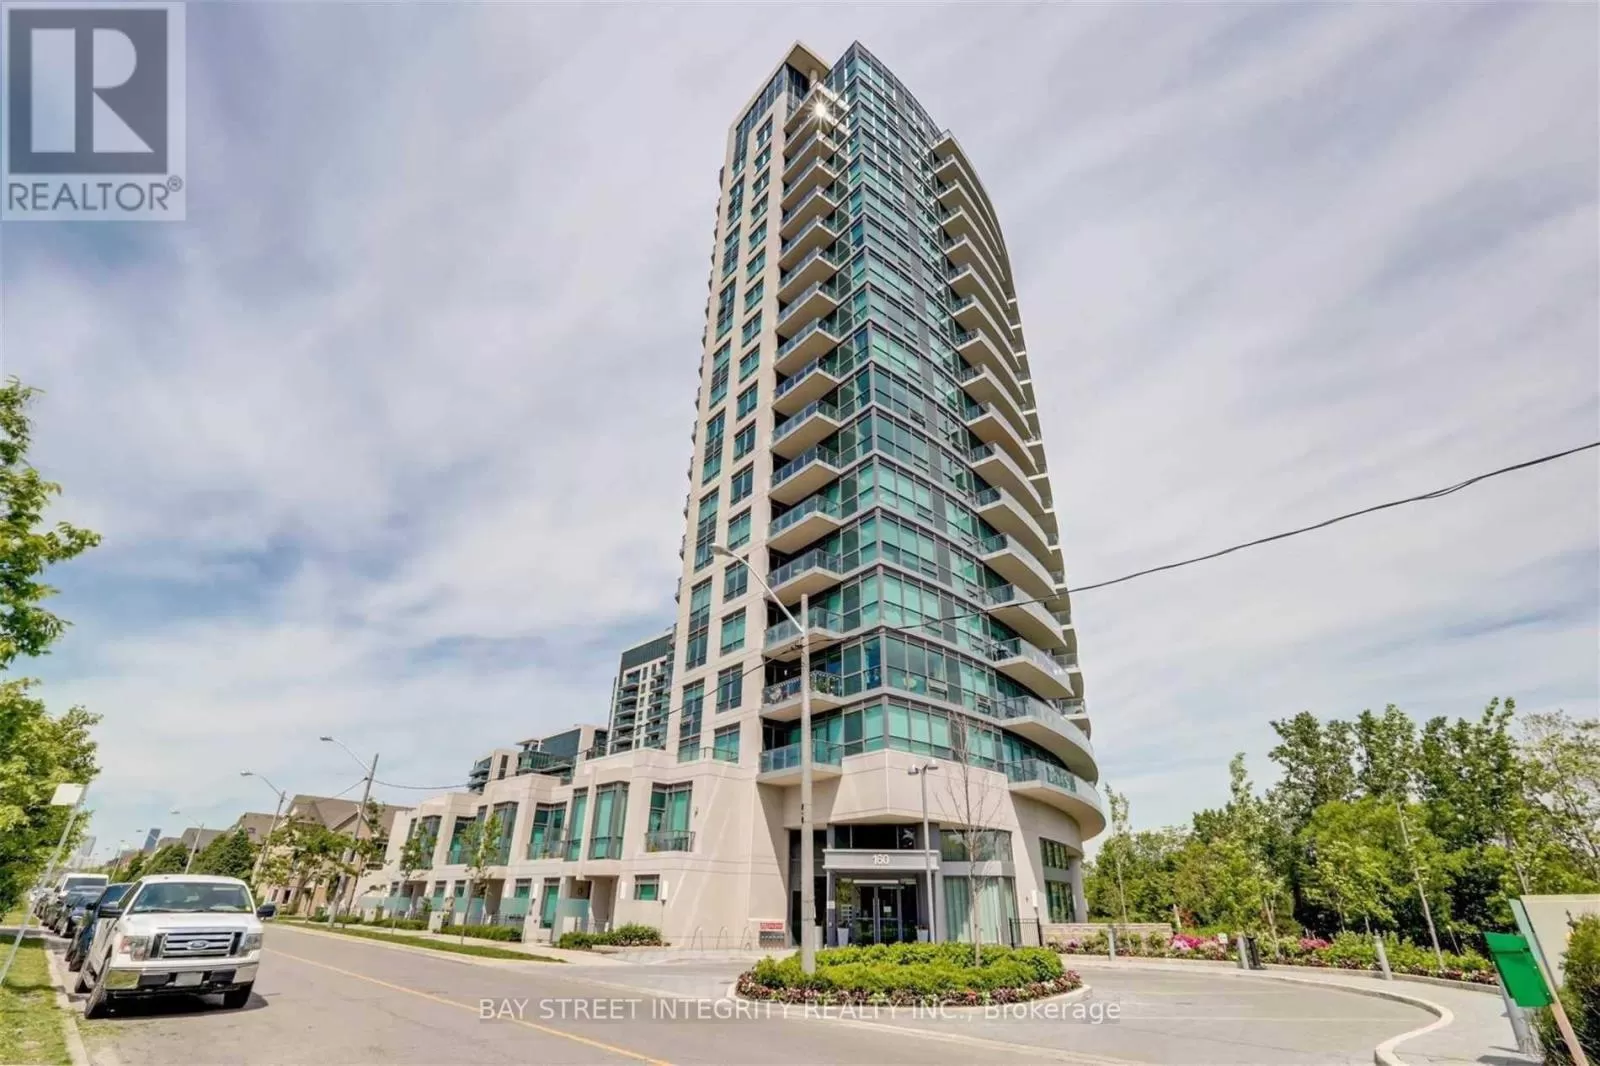 Apartment for rent: #415 -160 Vanderhoof Ave, Toronto, Ontario M4G 0B7